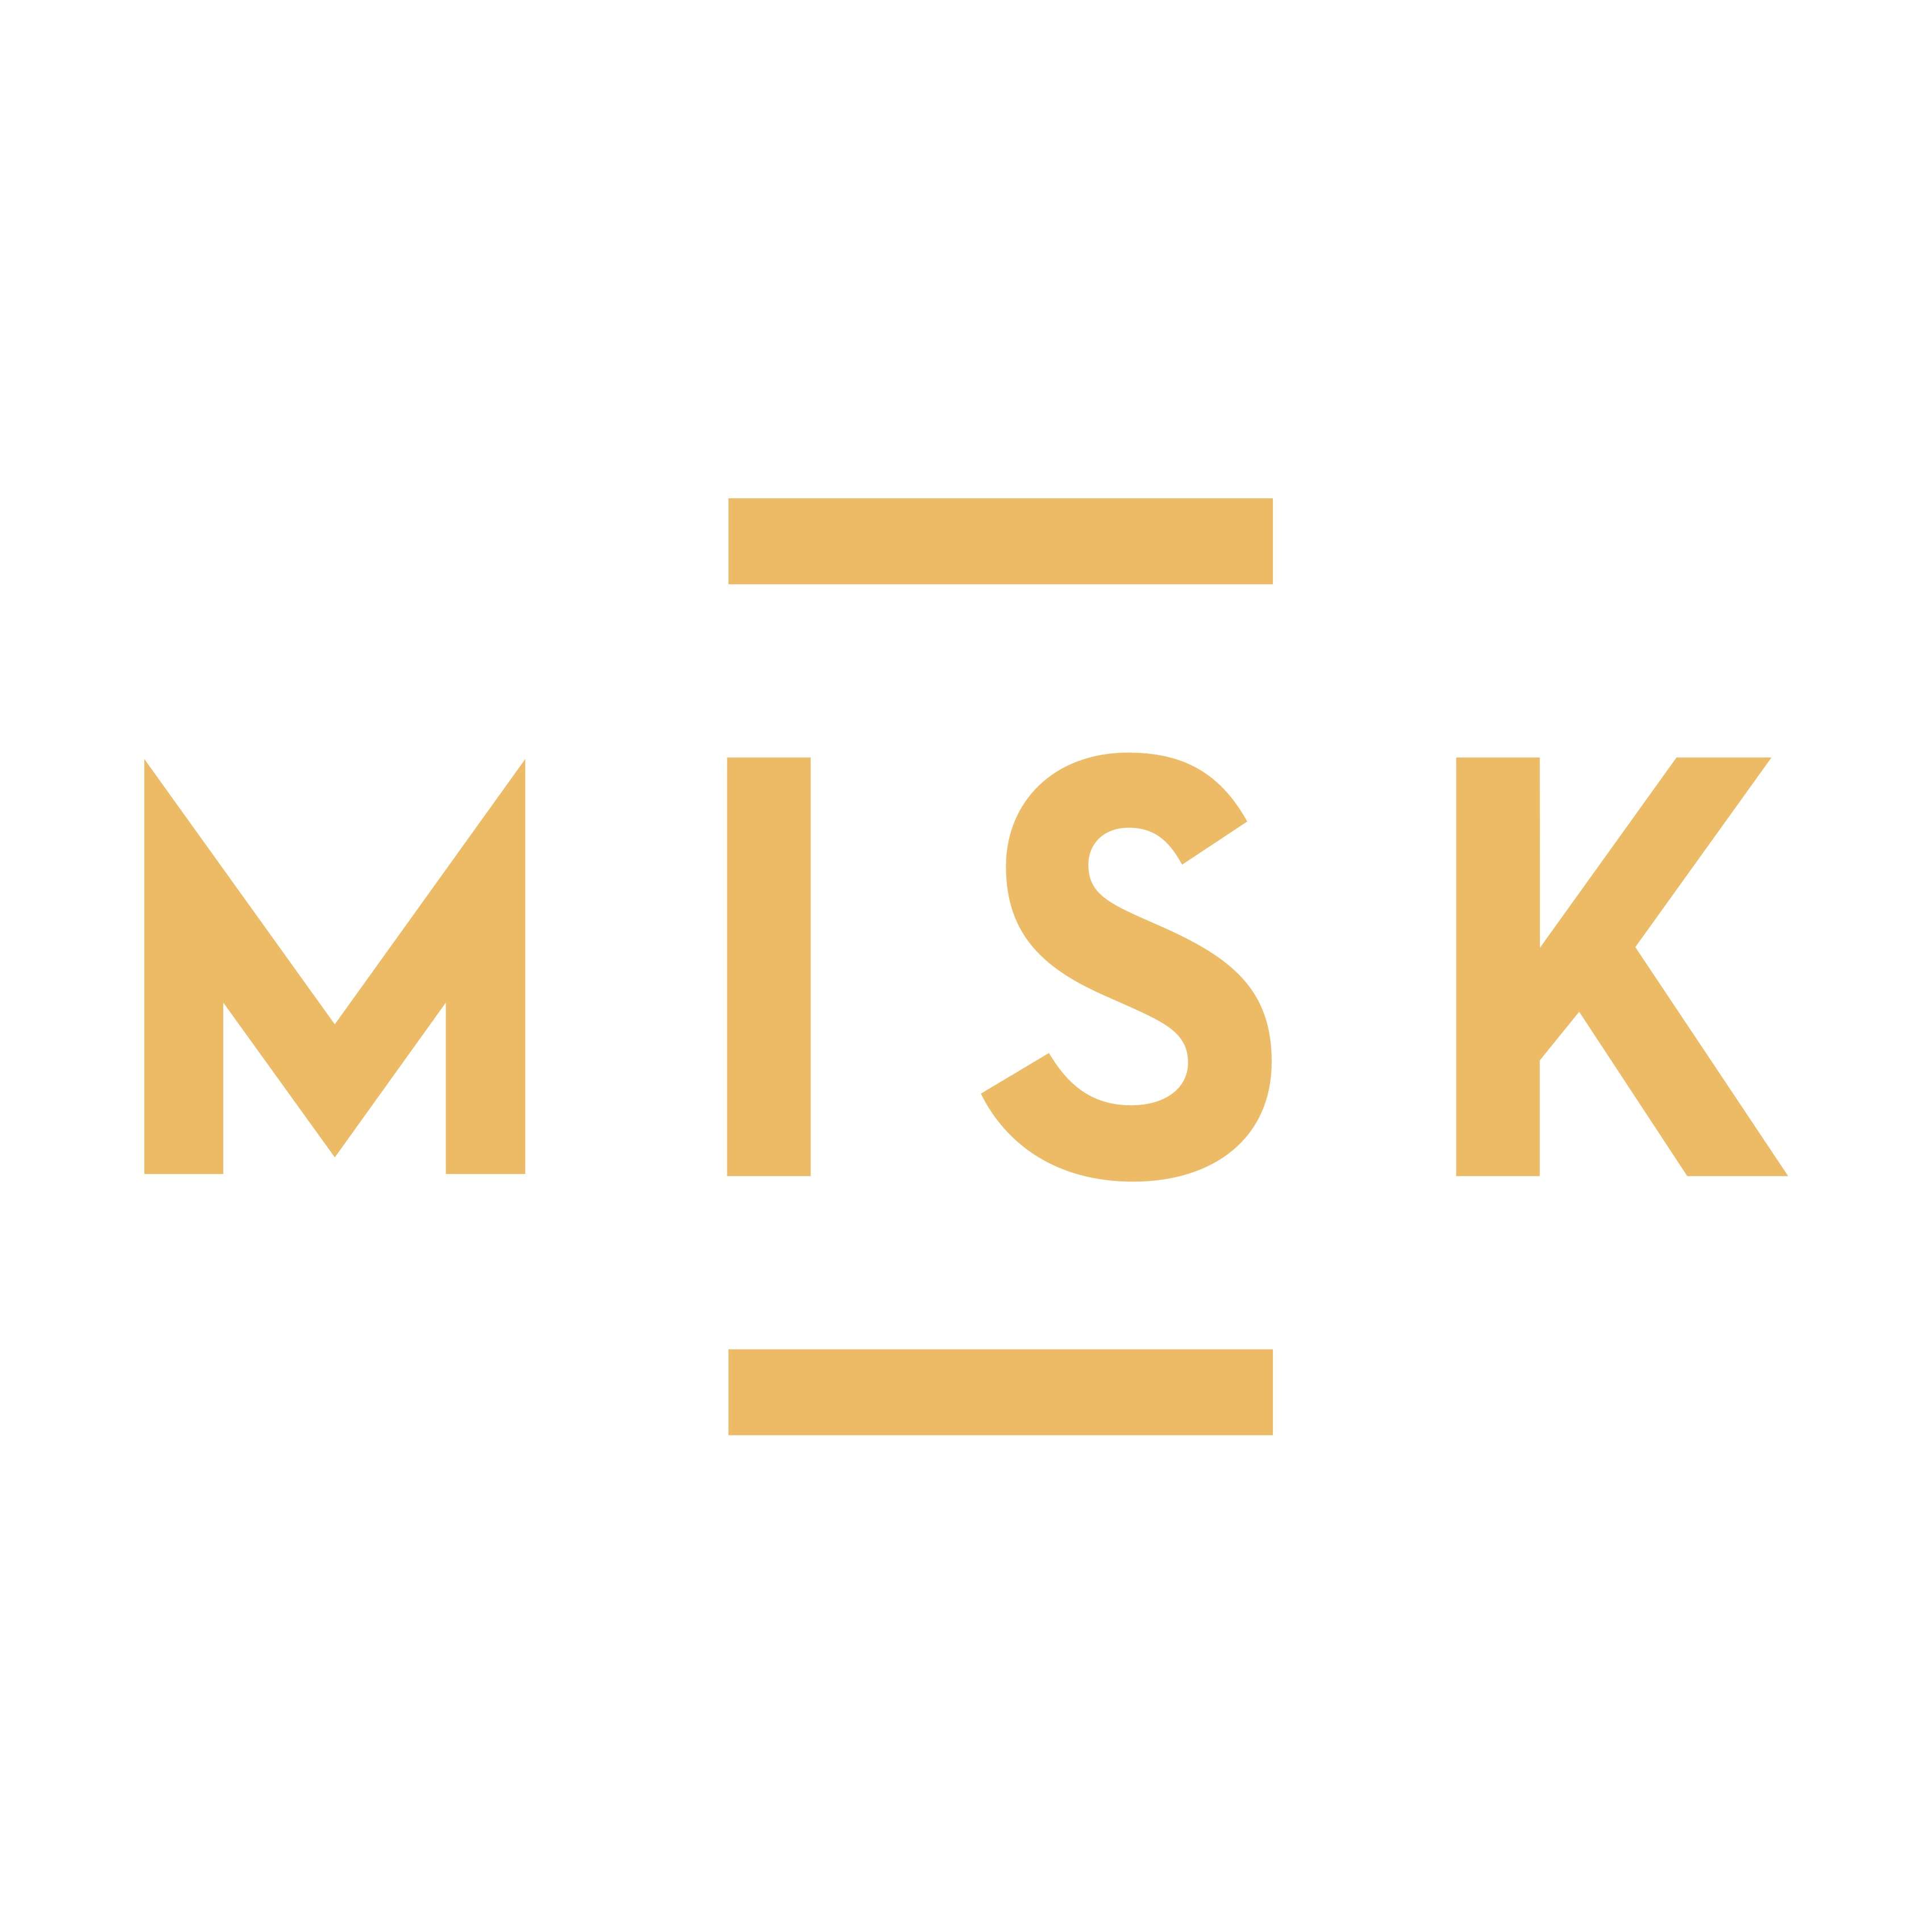 Misk - Crunchbase Company Profile & Funding